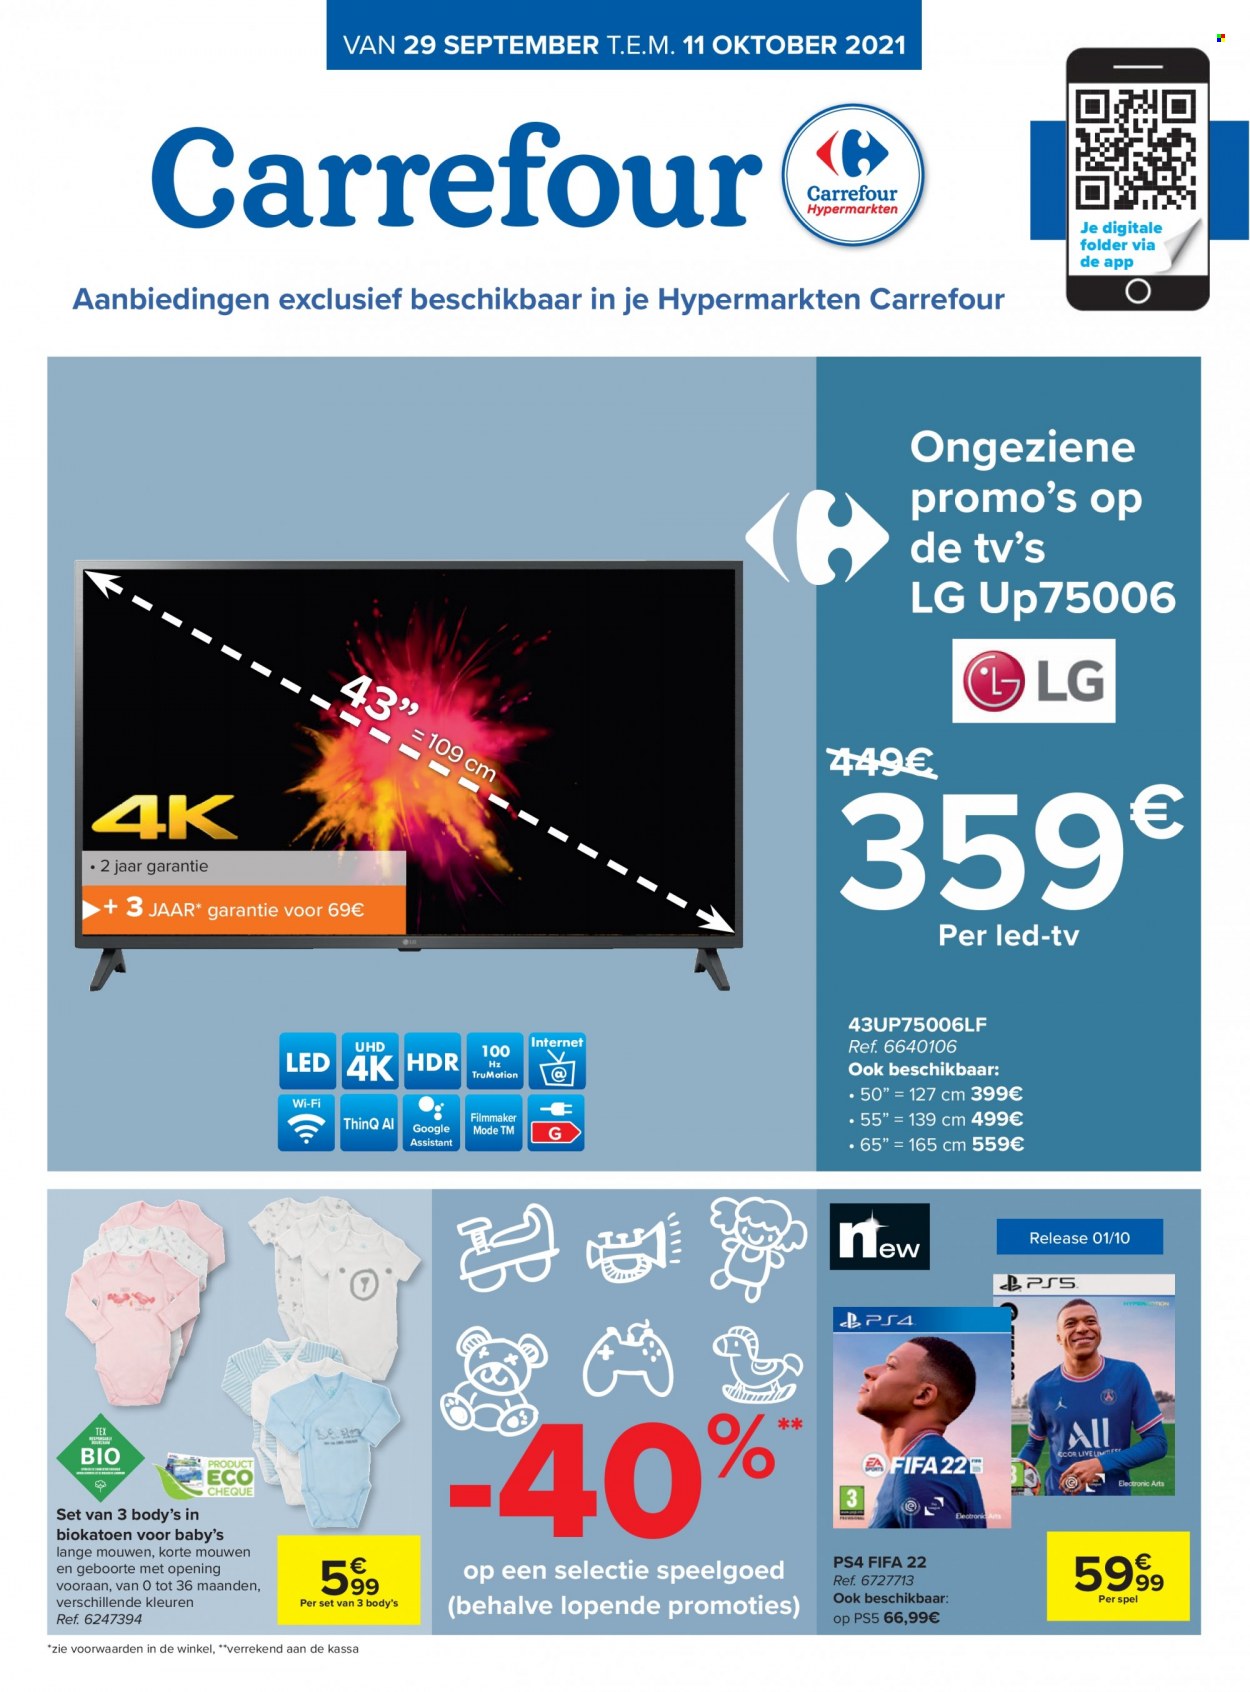 thumbnail - Catalogue Carrefour hypermarkt - 29/09/2021 - 11/10/2021 - Produits soldés - PS4, PS5, body, LG. Page 1.